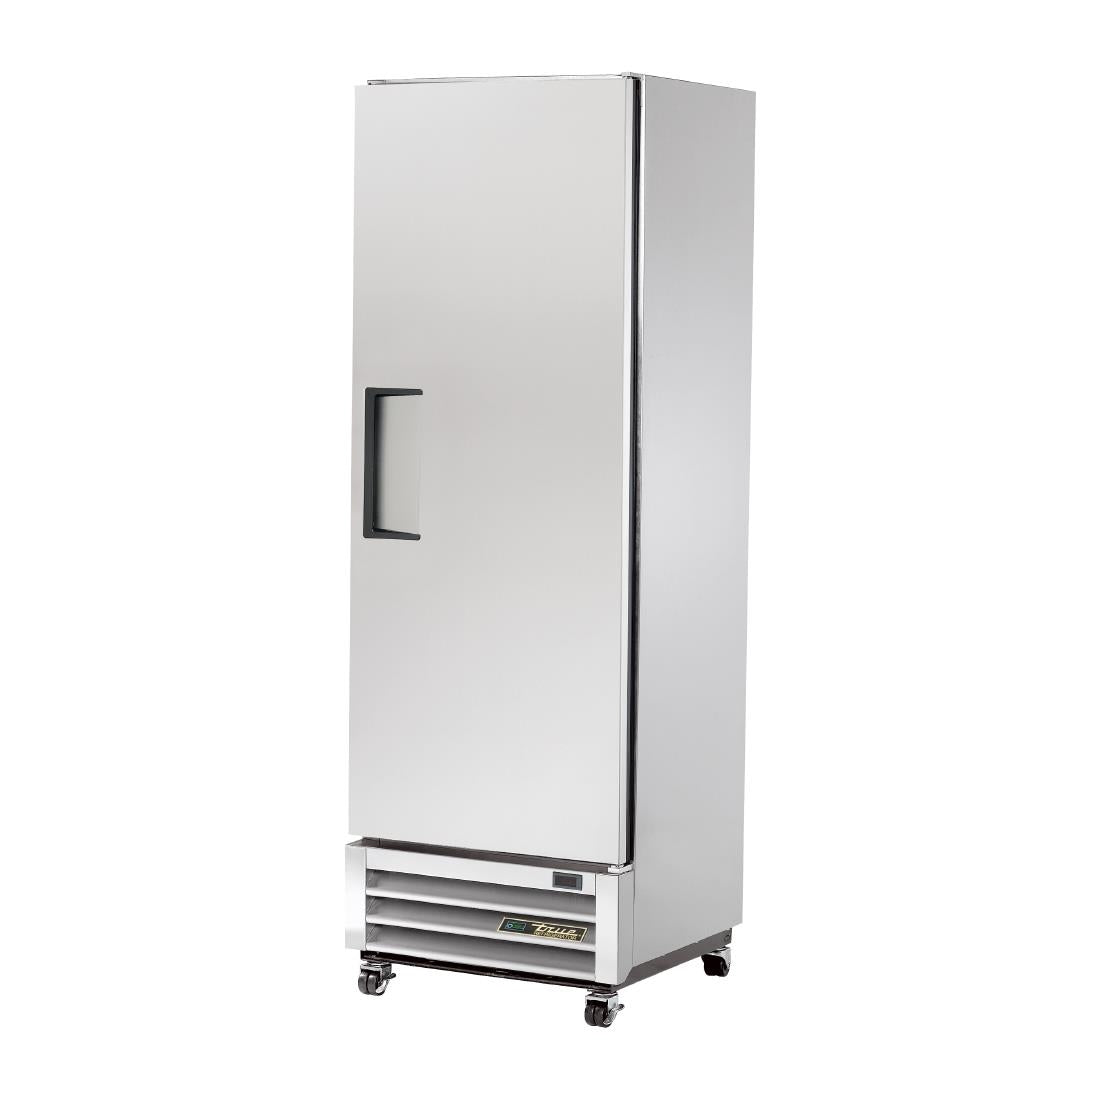 CX716 True Slimline Upright Foodservice Refrigerator T-15-HC-LD JD Catering Equipment Solutions Ltd